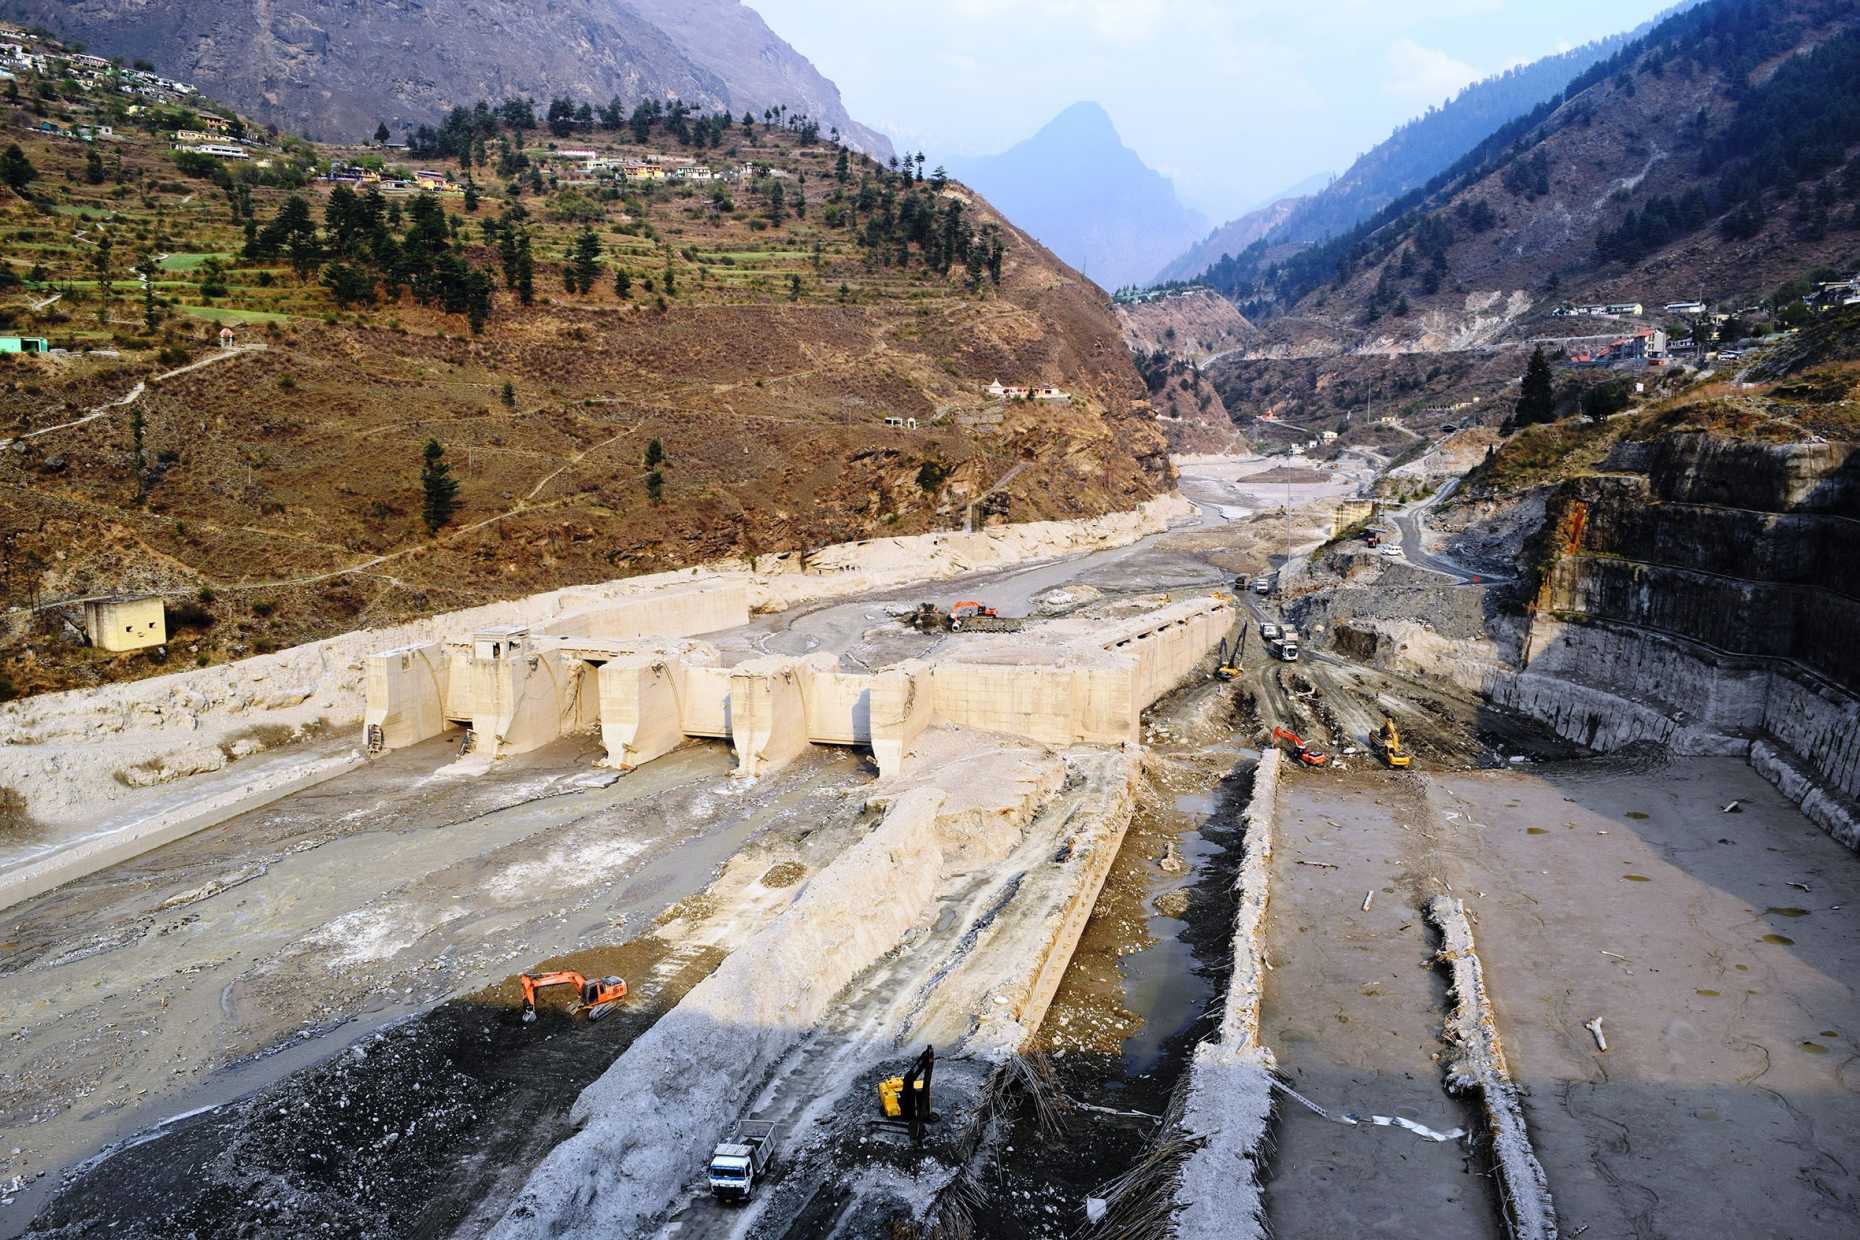 Destroyed Tapovan Vishnugad hydroelectric plant in the Indian Himalayas after the devastating debris flow of Feb 7, 2021